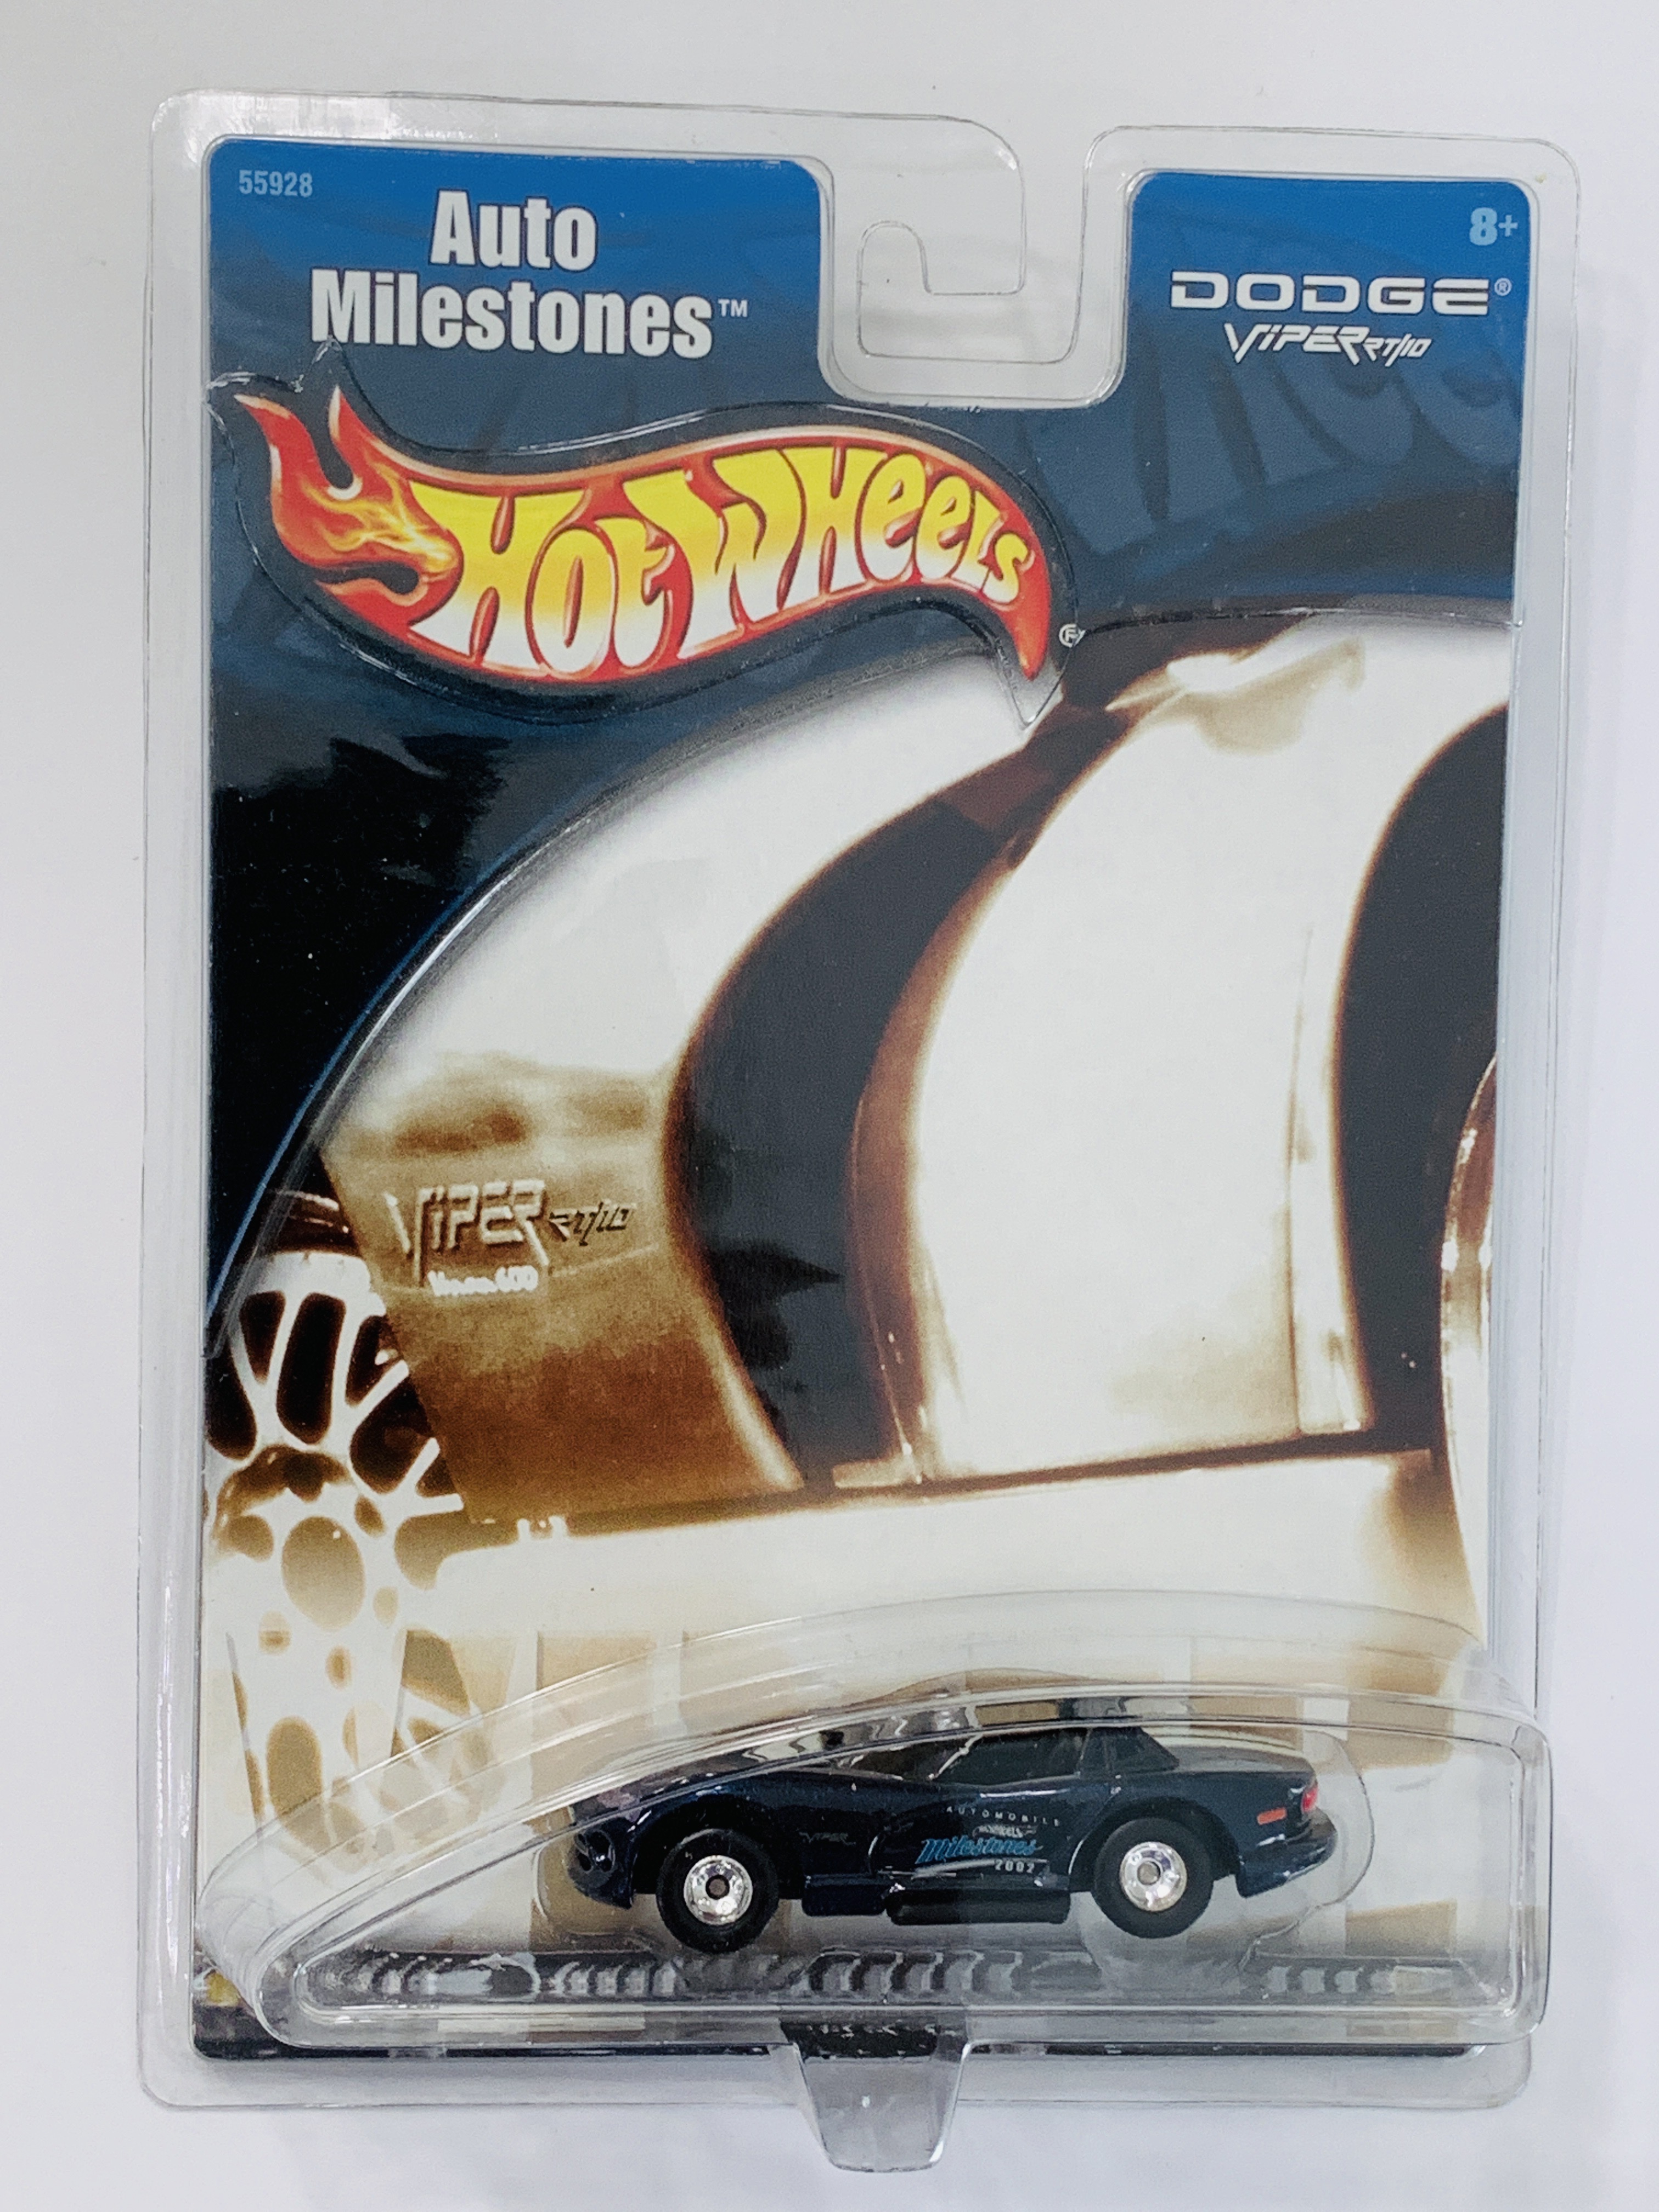 Hot Wheels Auto Milestones Dodge Viper RT/10